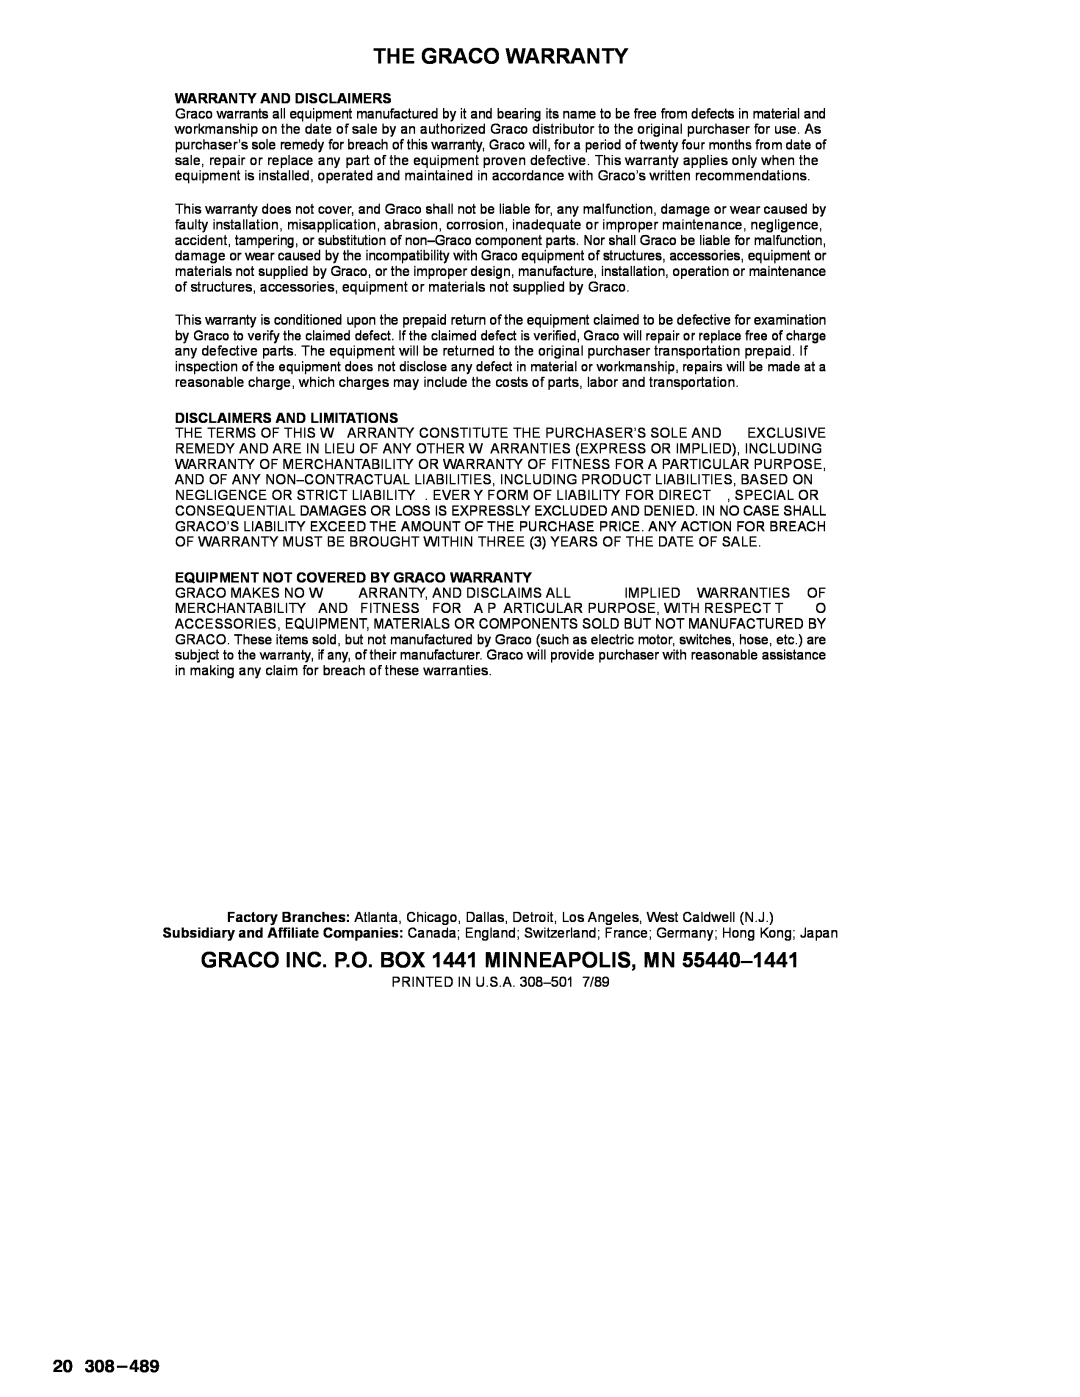 Graco Inc 2245, 308-501 The Graco Warranty, GRACO INC. P.O. BOX 1441 MINNEAPOLIS, MN,  , Warranty And Disclaimers 